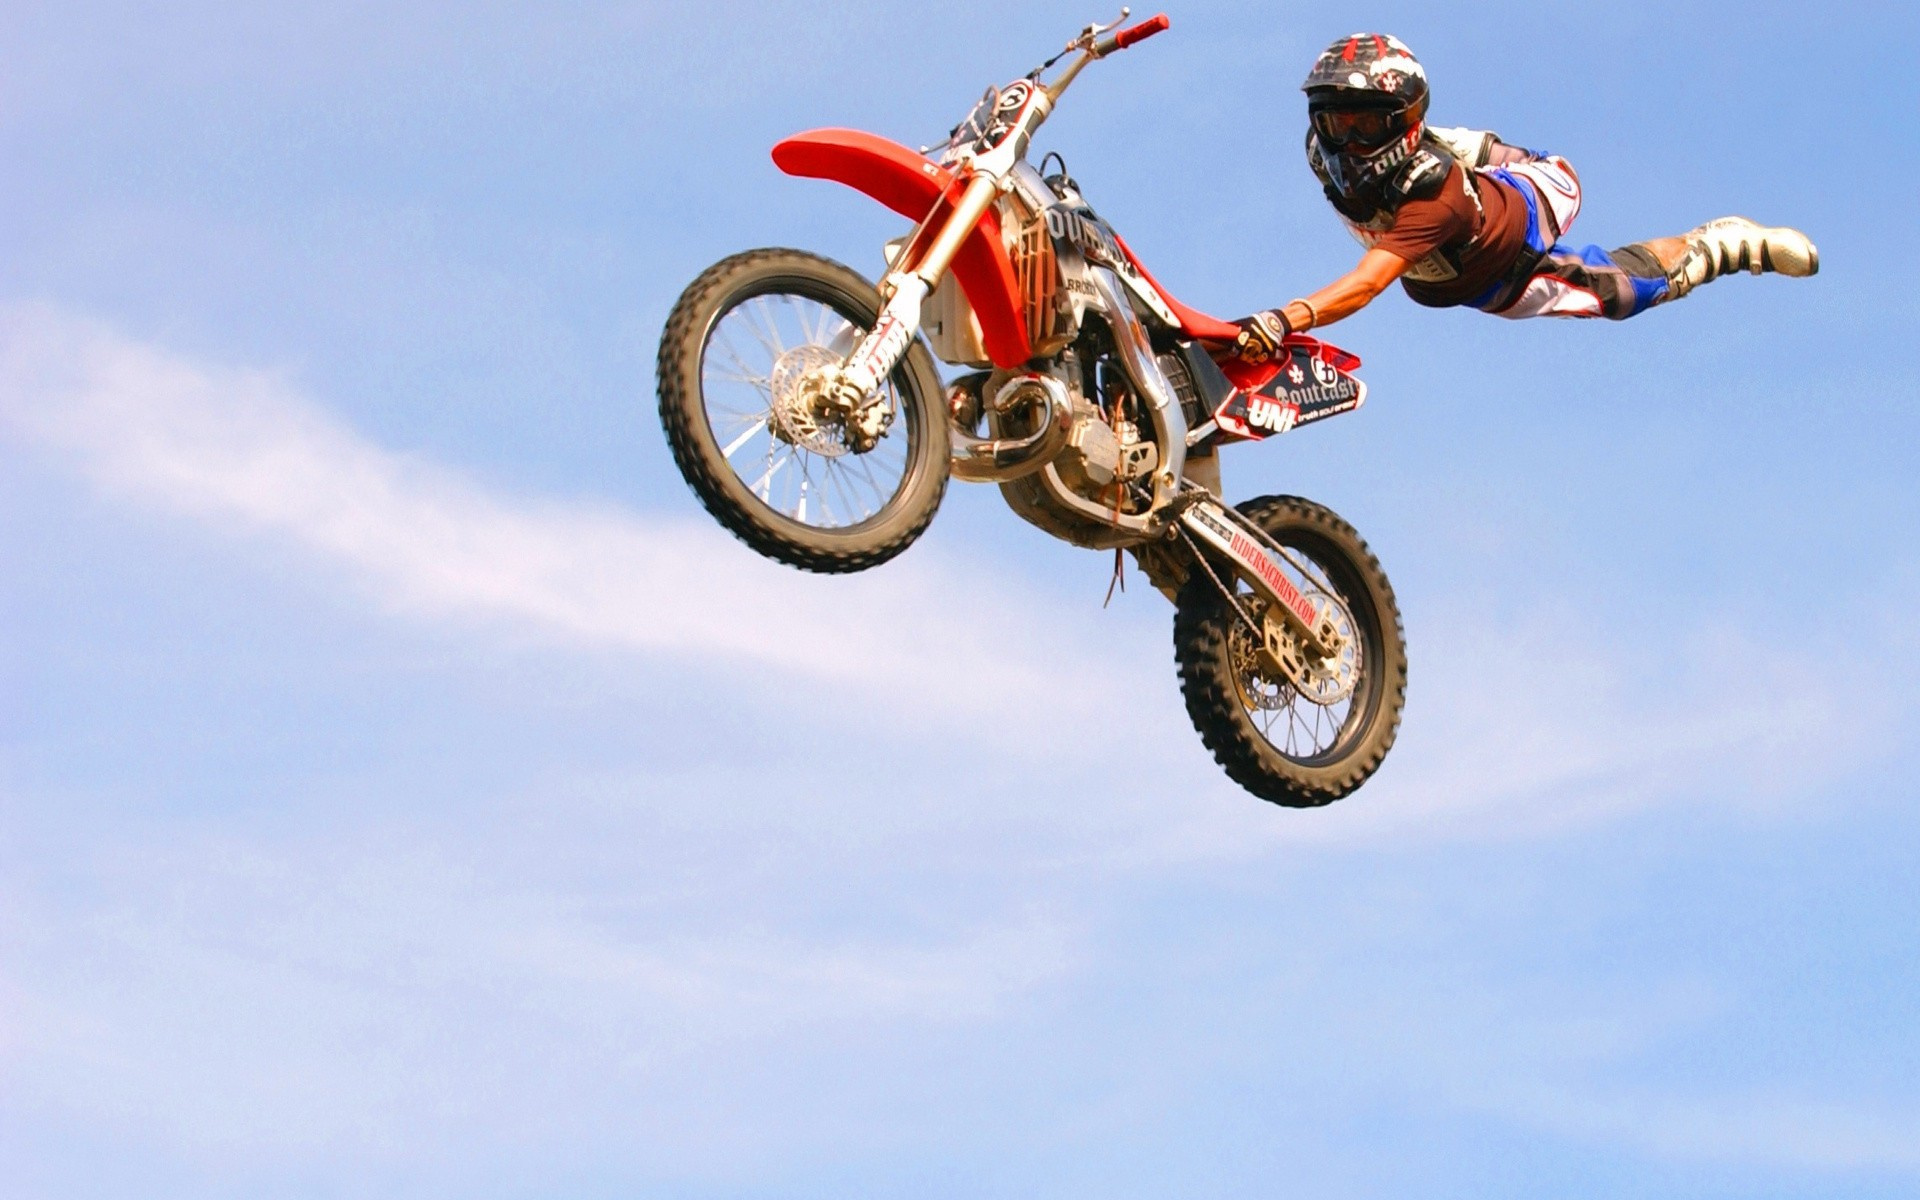 Stunt: Stuntwoman in the air, KTM dirt bike, Aesthetics and a high risk. 1920x1200 HD Wallpaper.